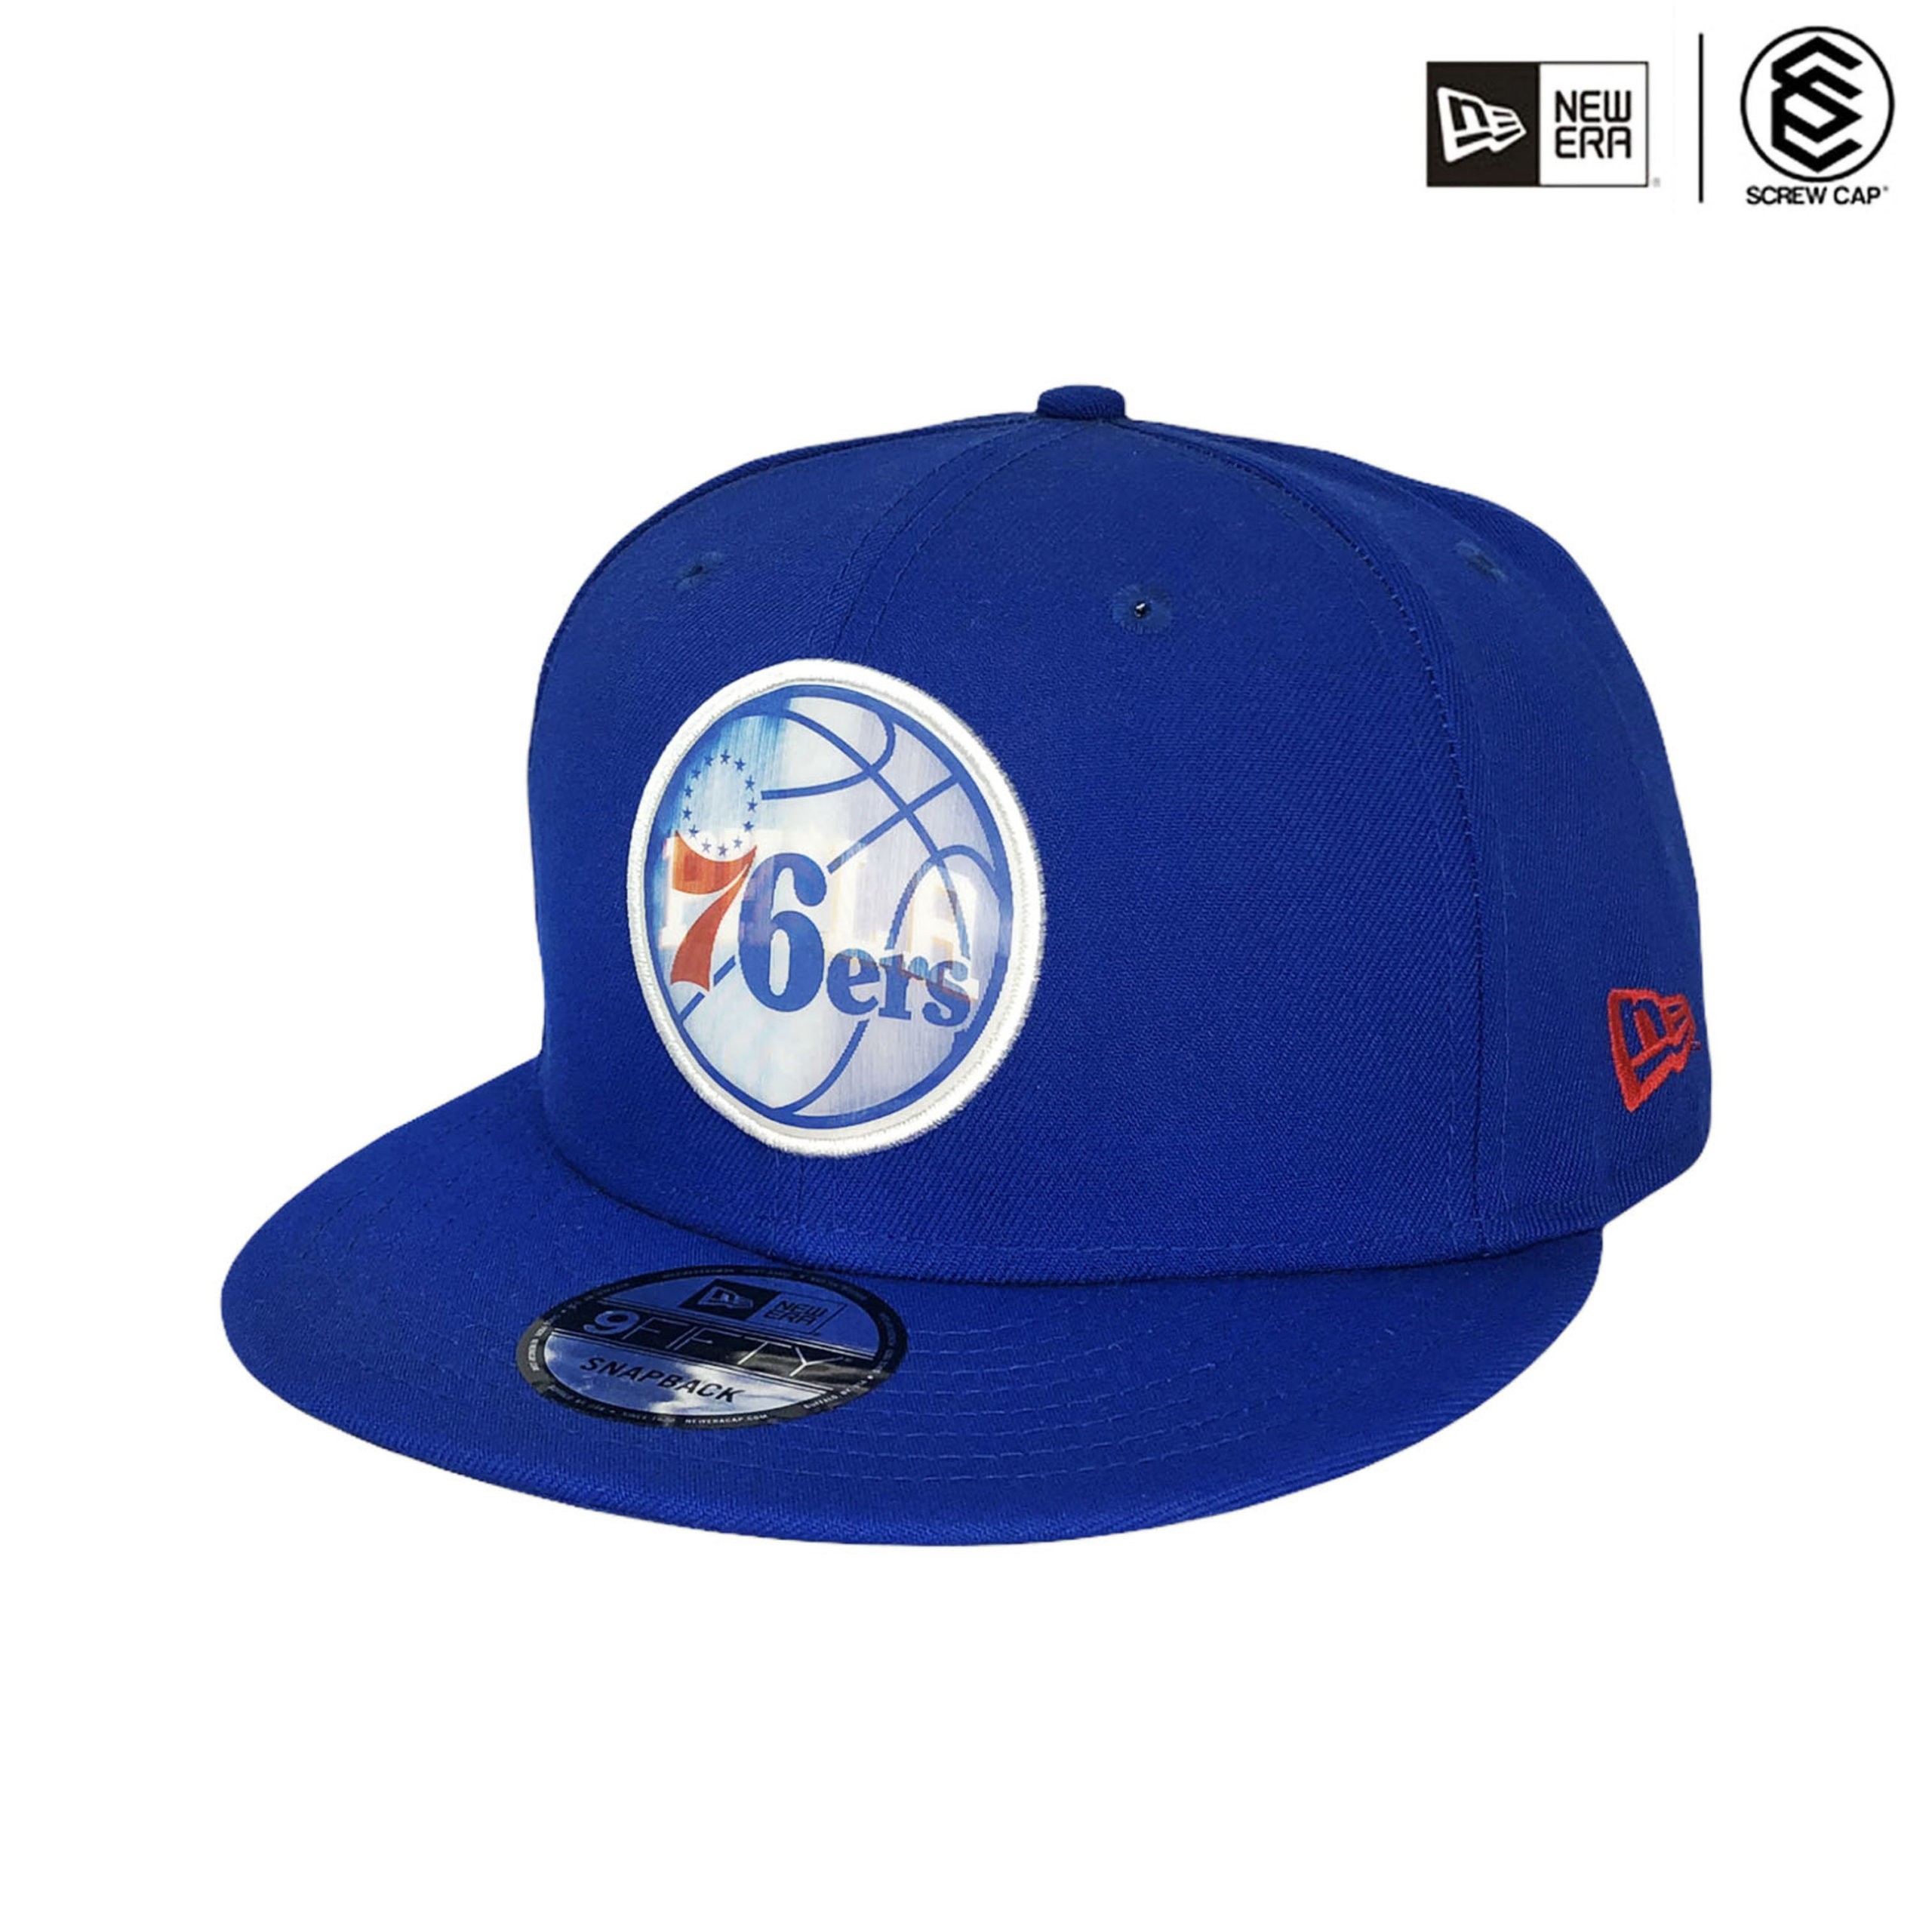 NEW ERA 9FIFTY 950 NBA CHANGE 變化LOGO 76人 藍色 OTC 帽子⫷ScrewCap⫸